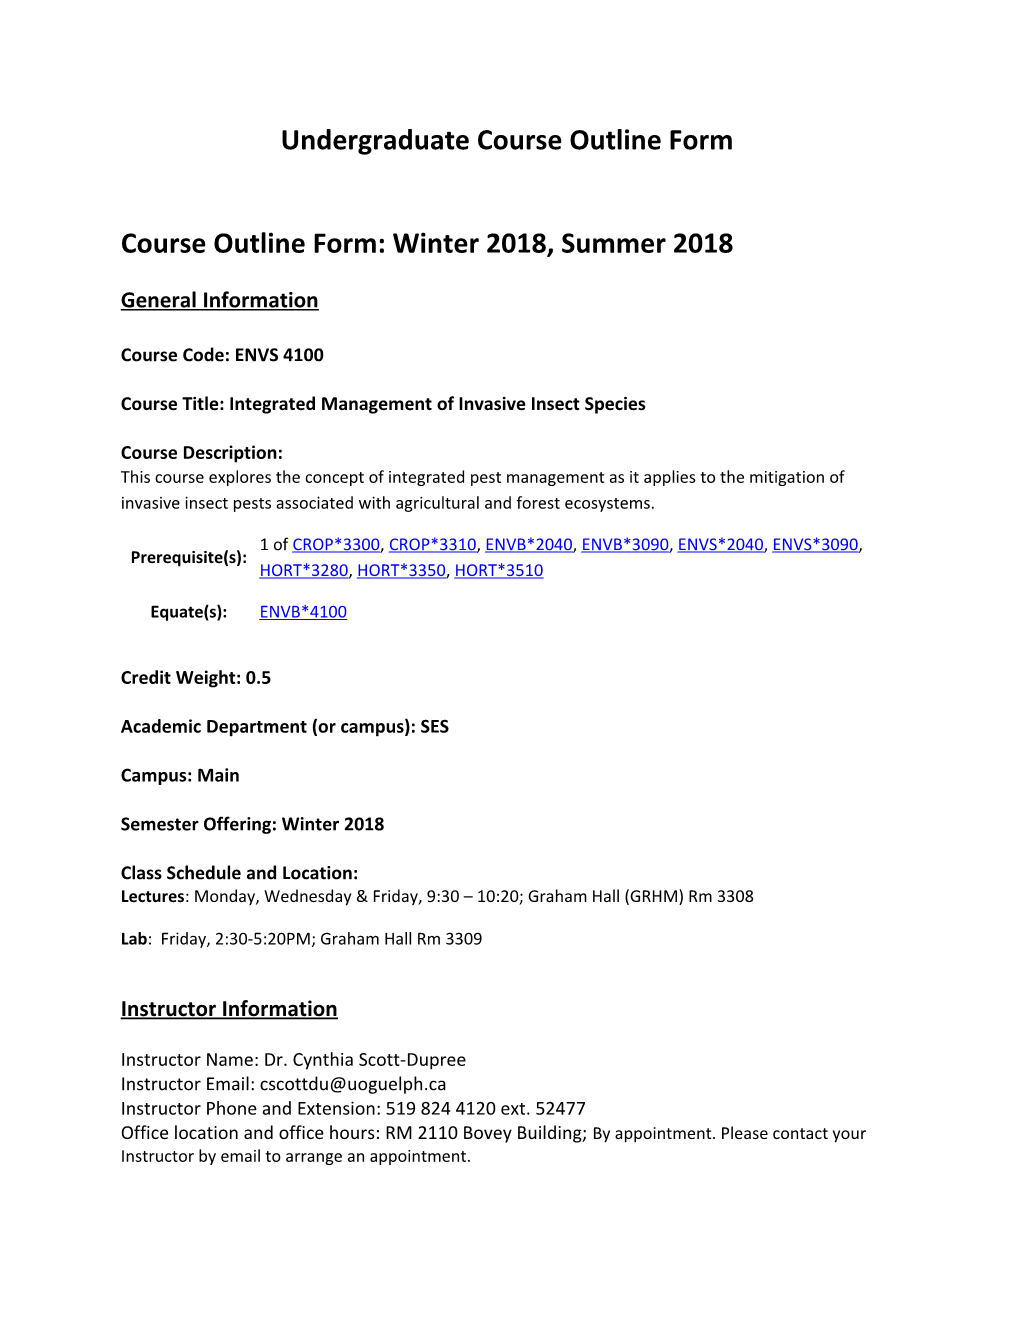 Course Outline Form: Winter 2018, Summer 2018